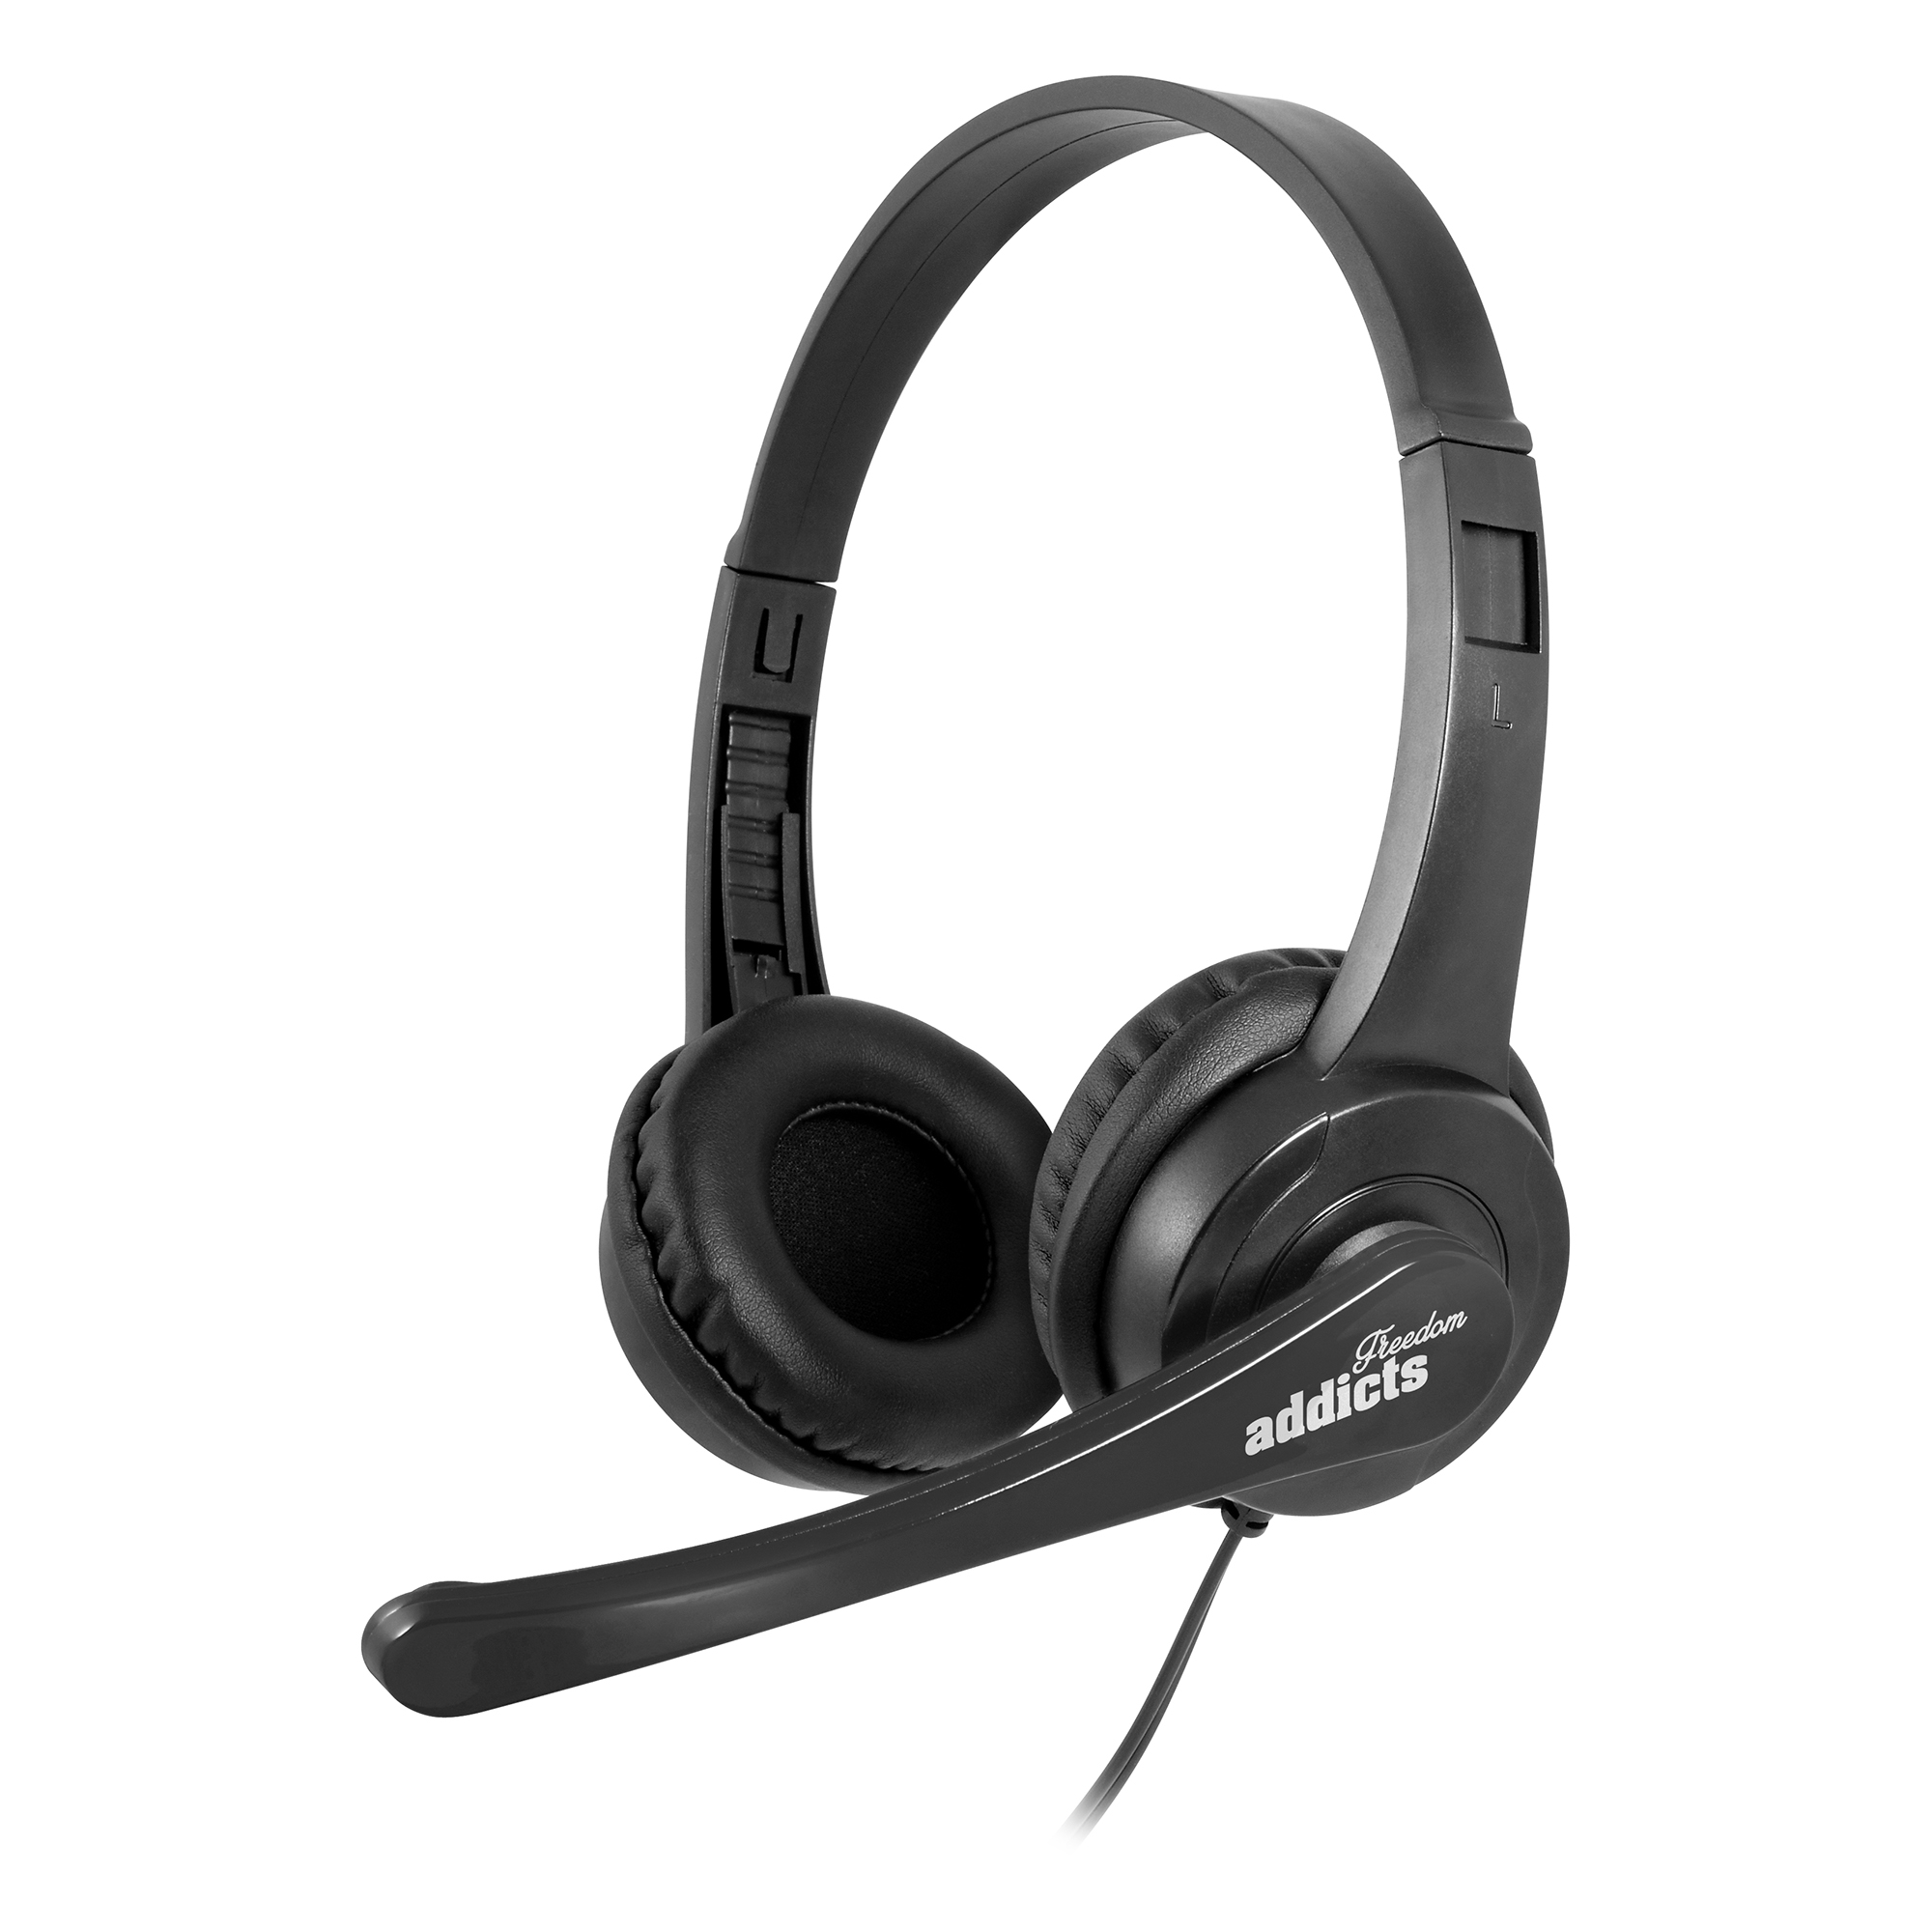 NGS VOX505USB, Over-ear Headset mit Schwarz Mikrofon